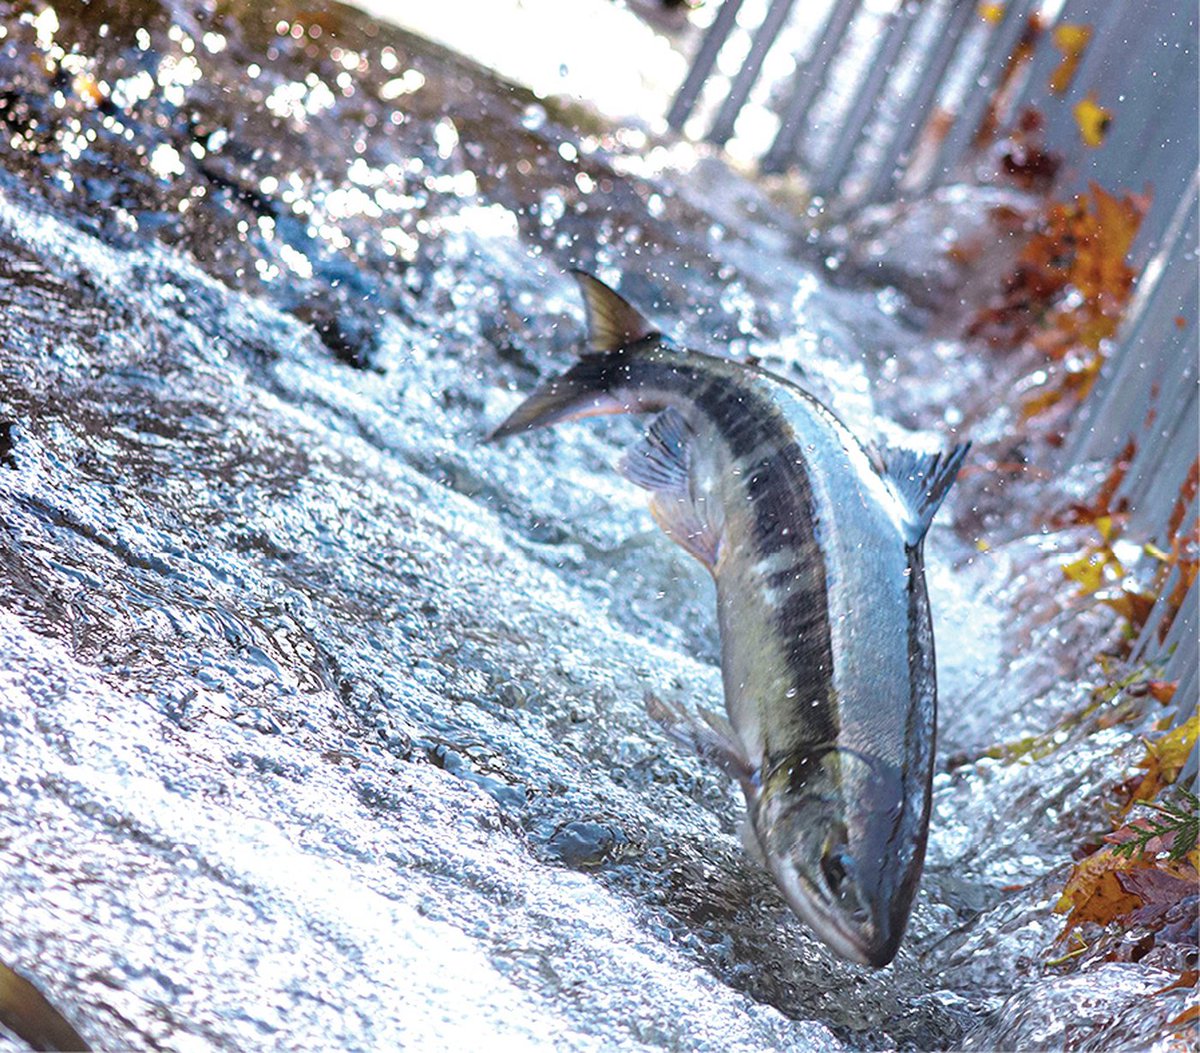 Food fishery flounders: low returns tinyurl.com/yvwmxktr #Tlaamin #quathet #salmon